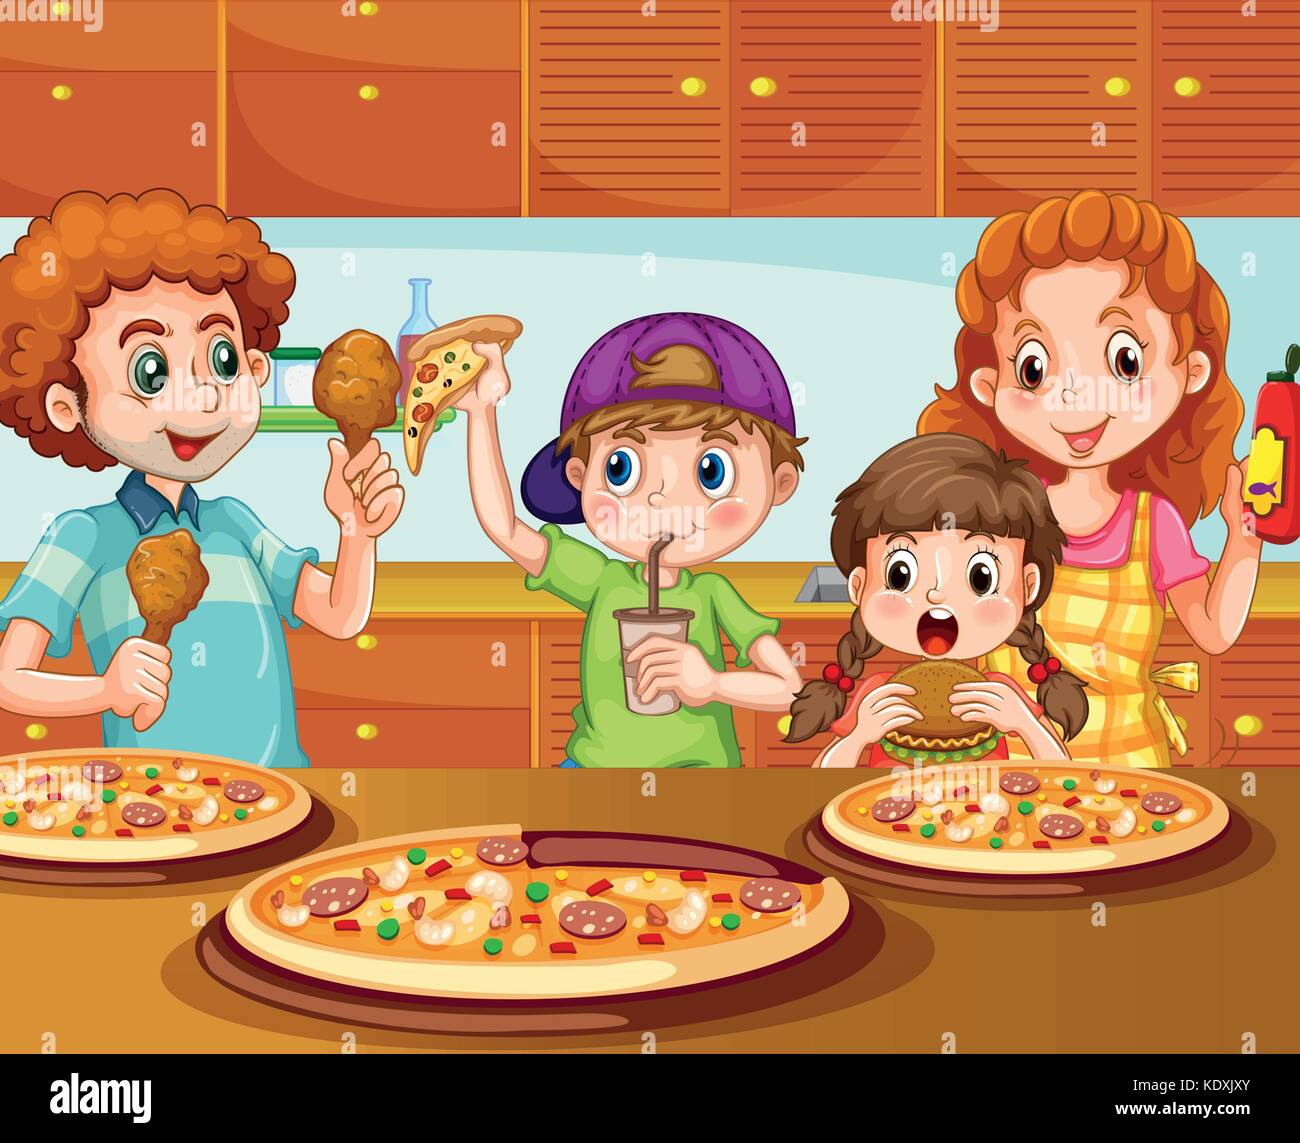 Family having pizza in kitchen illustration Stock Vector